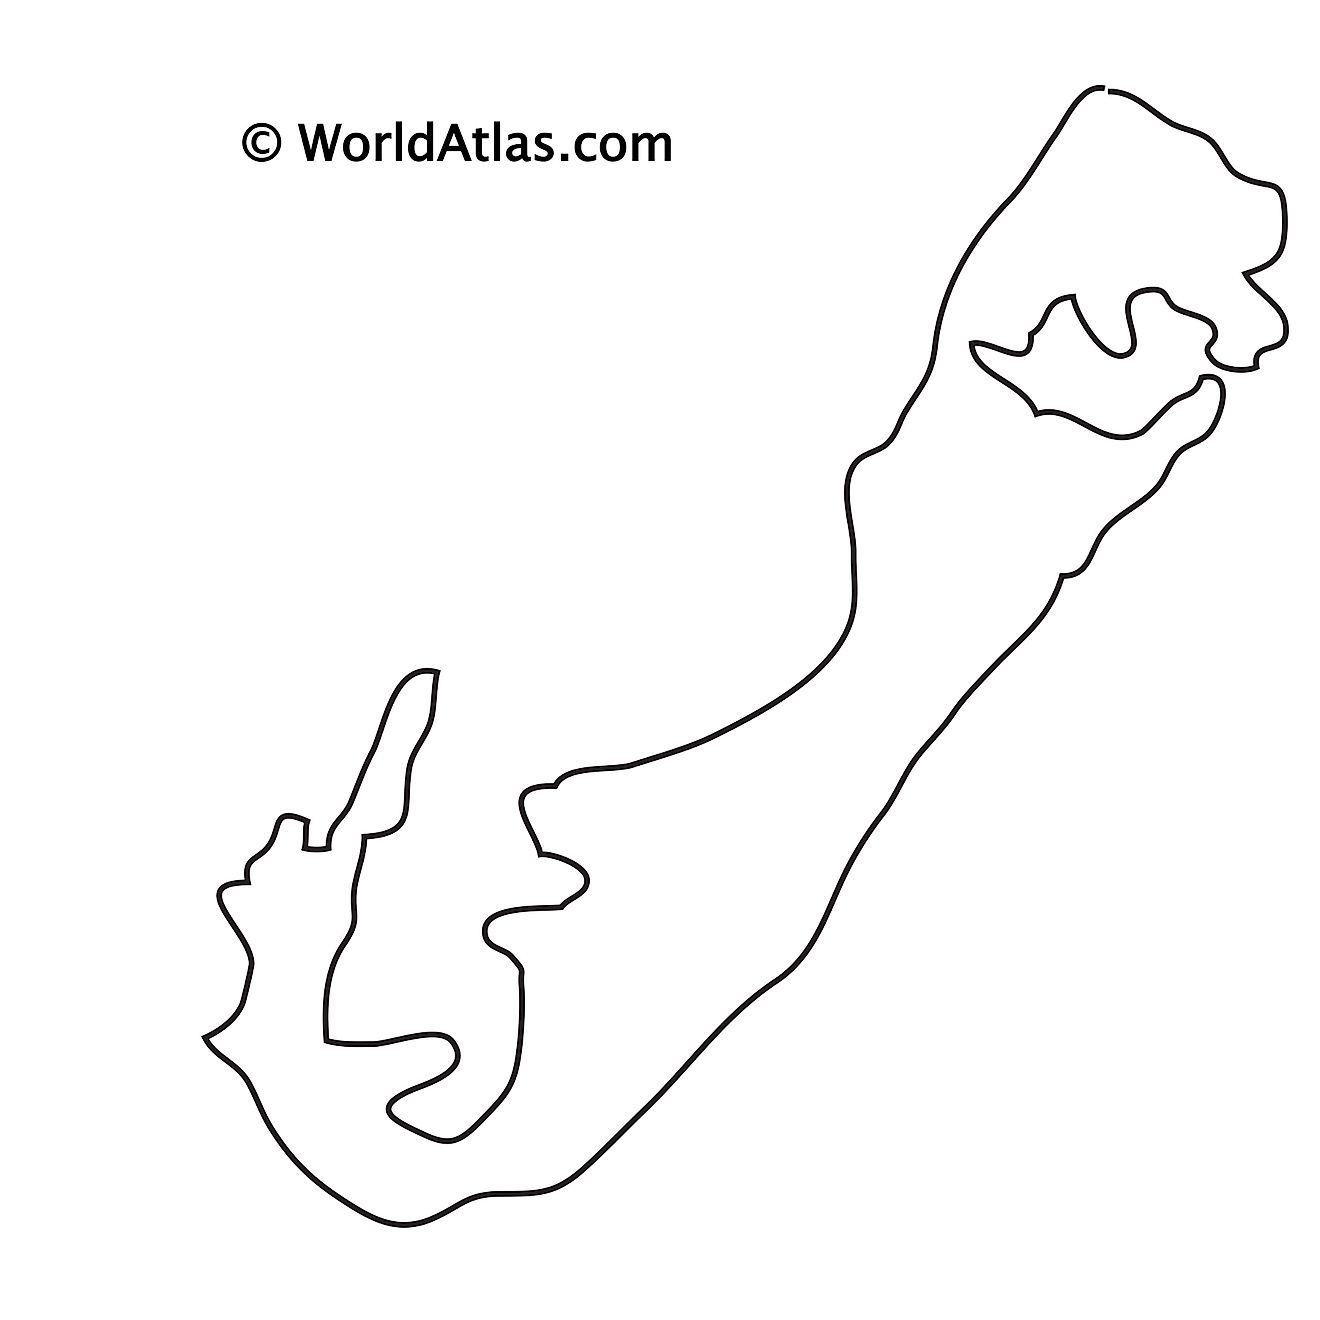 Blank outline map of Bermuda